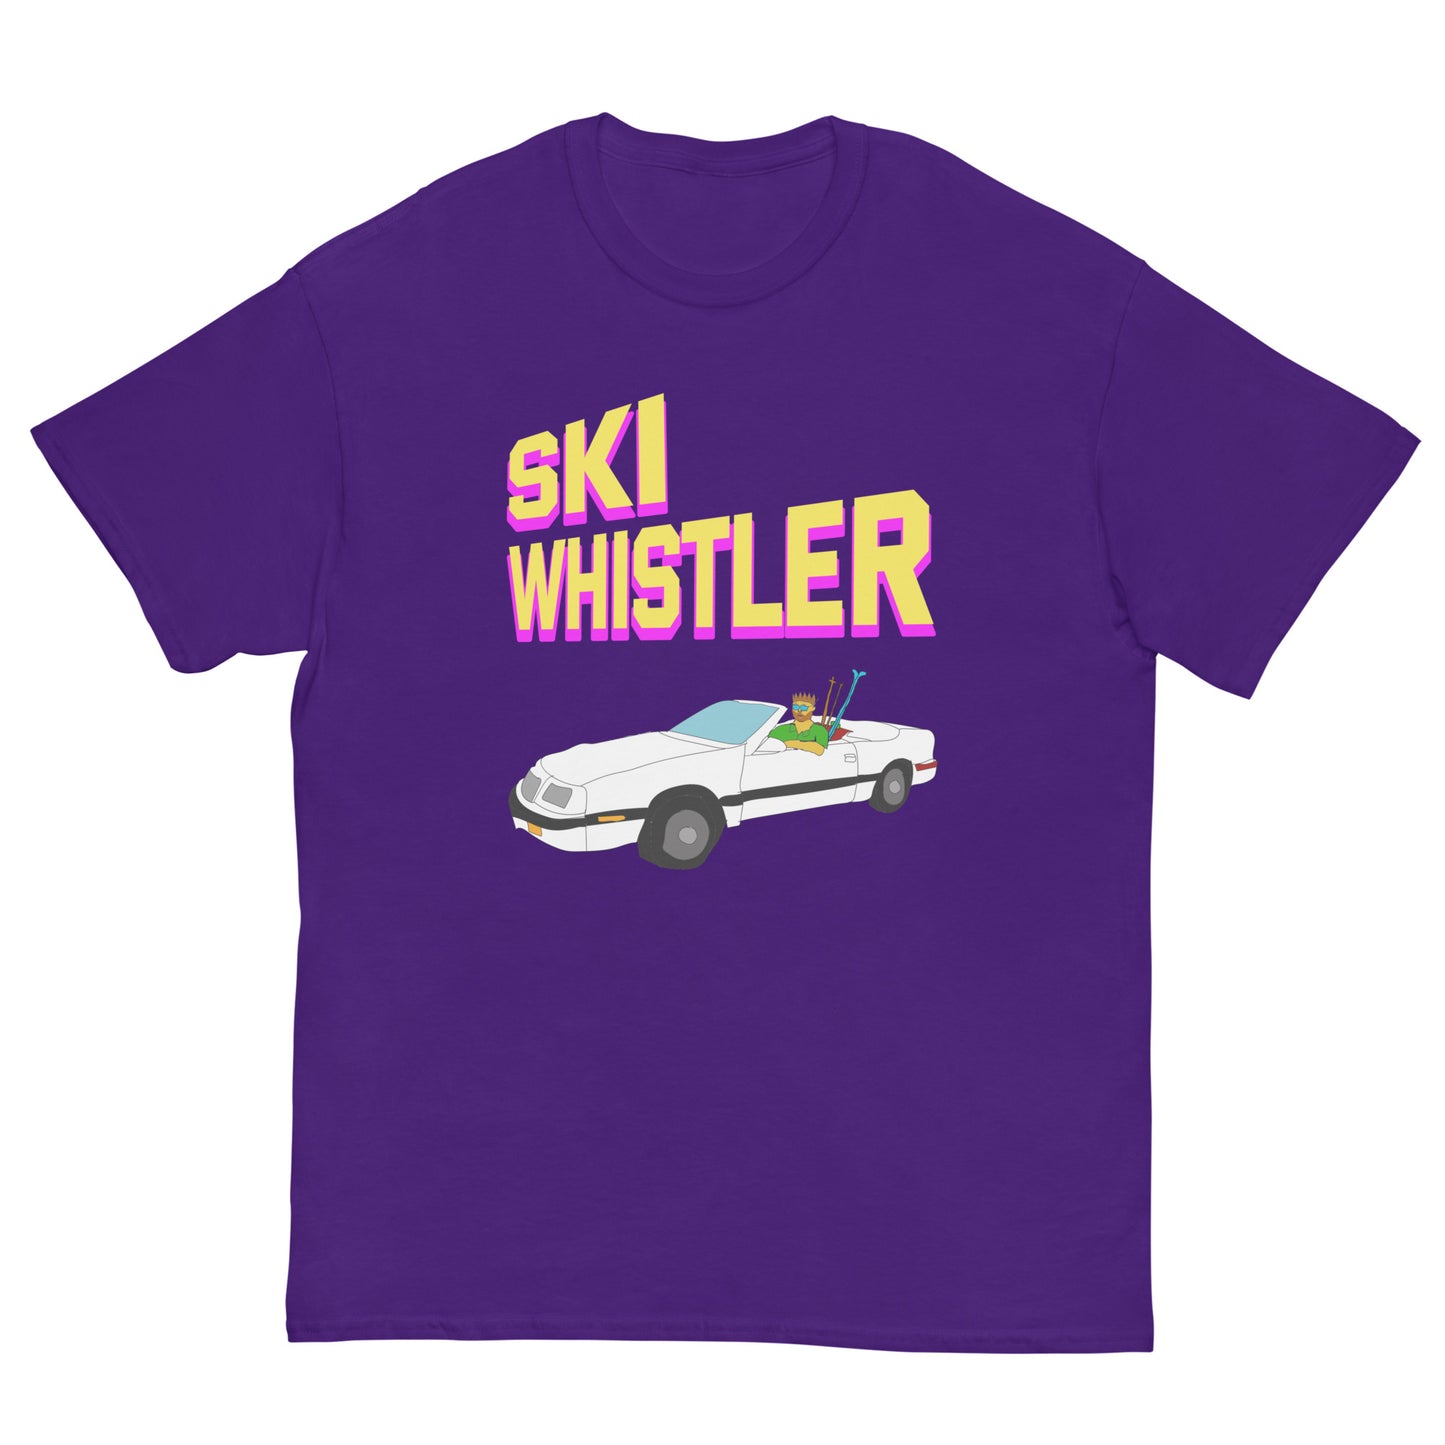 Ski Whistler convertible printed t-shirt